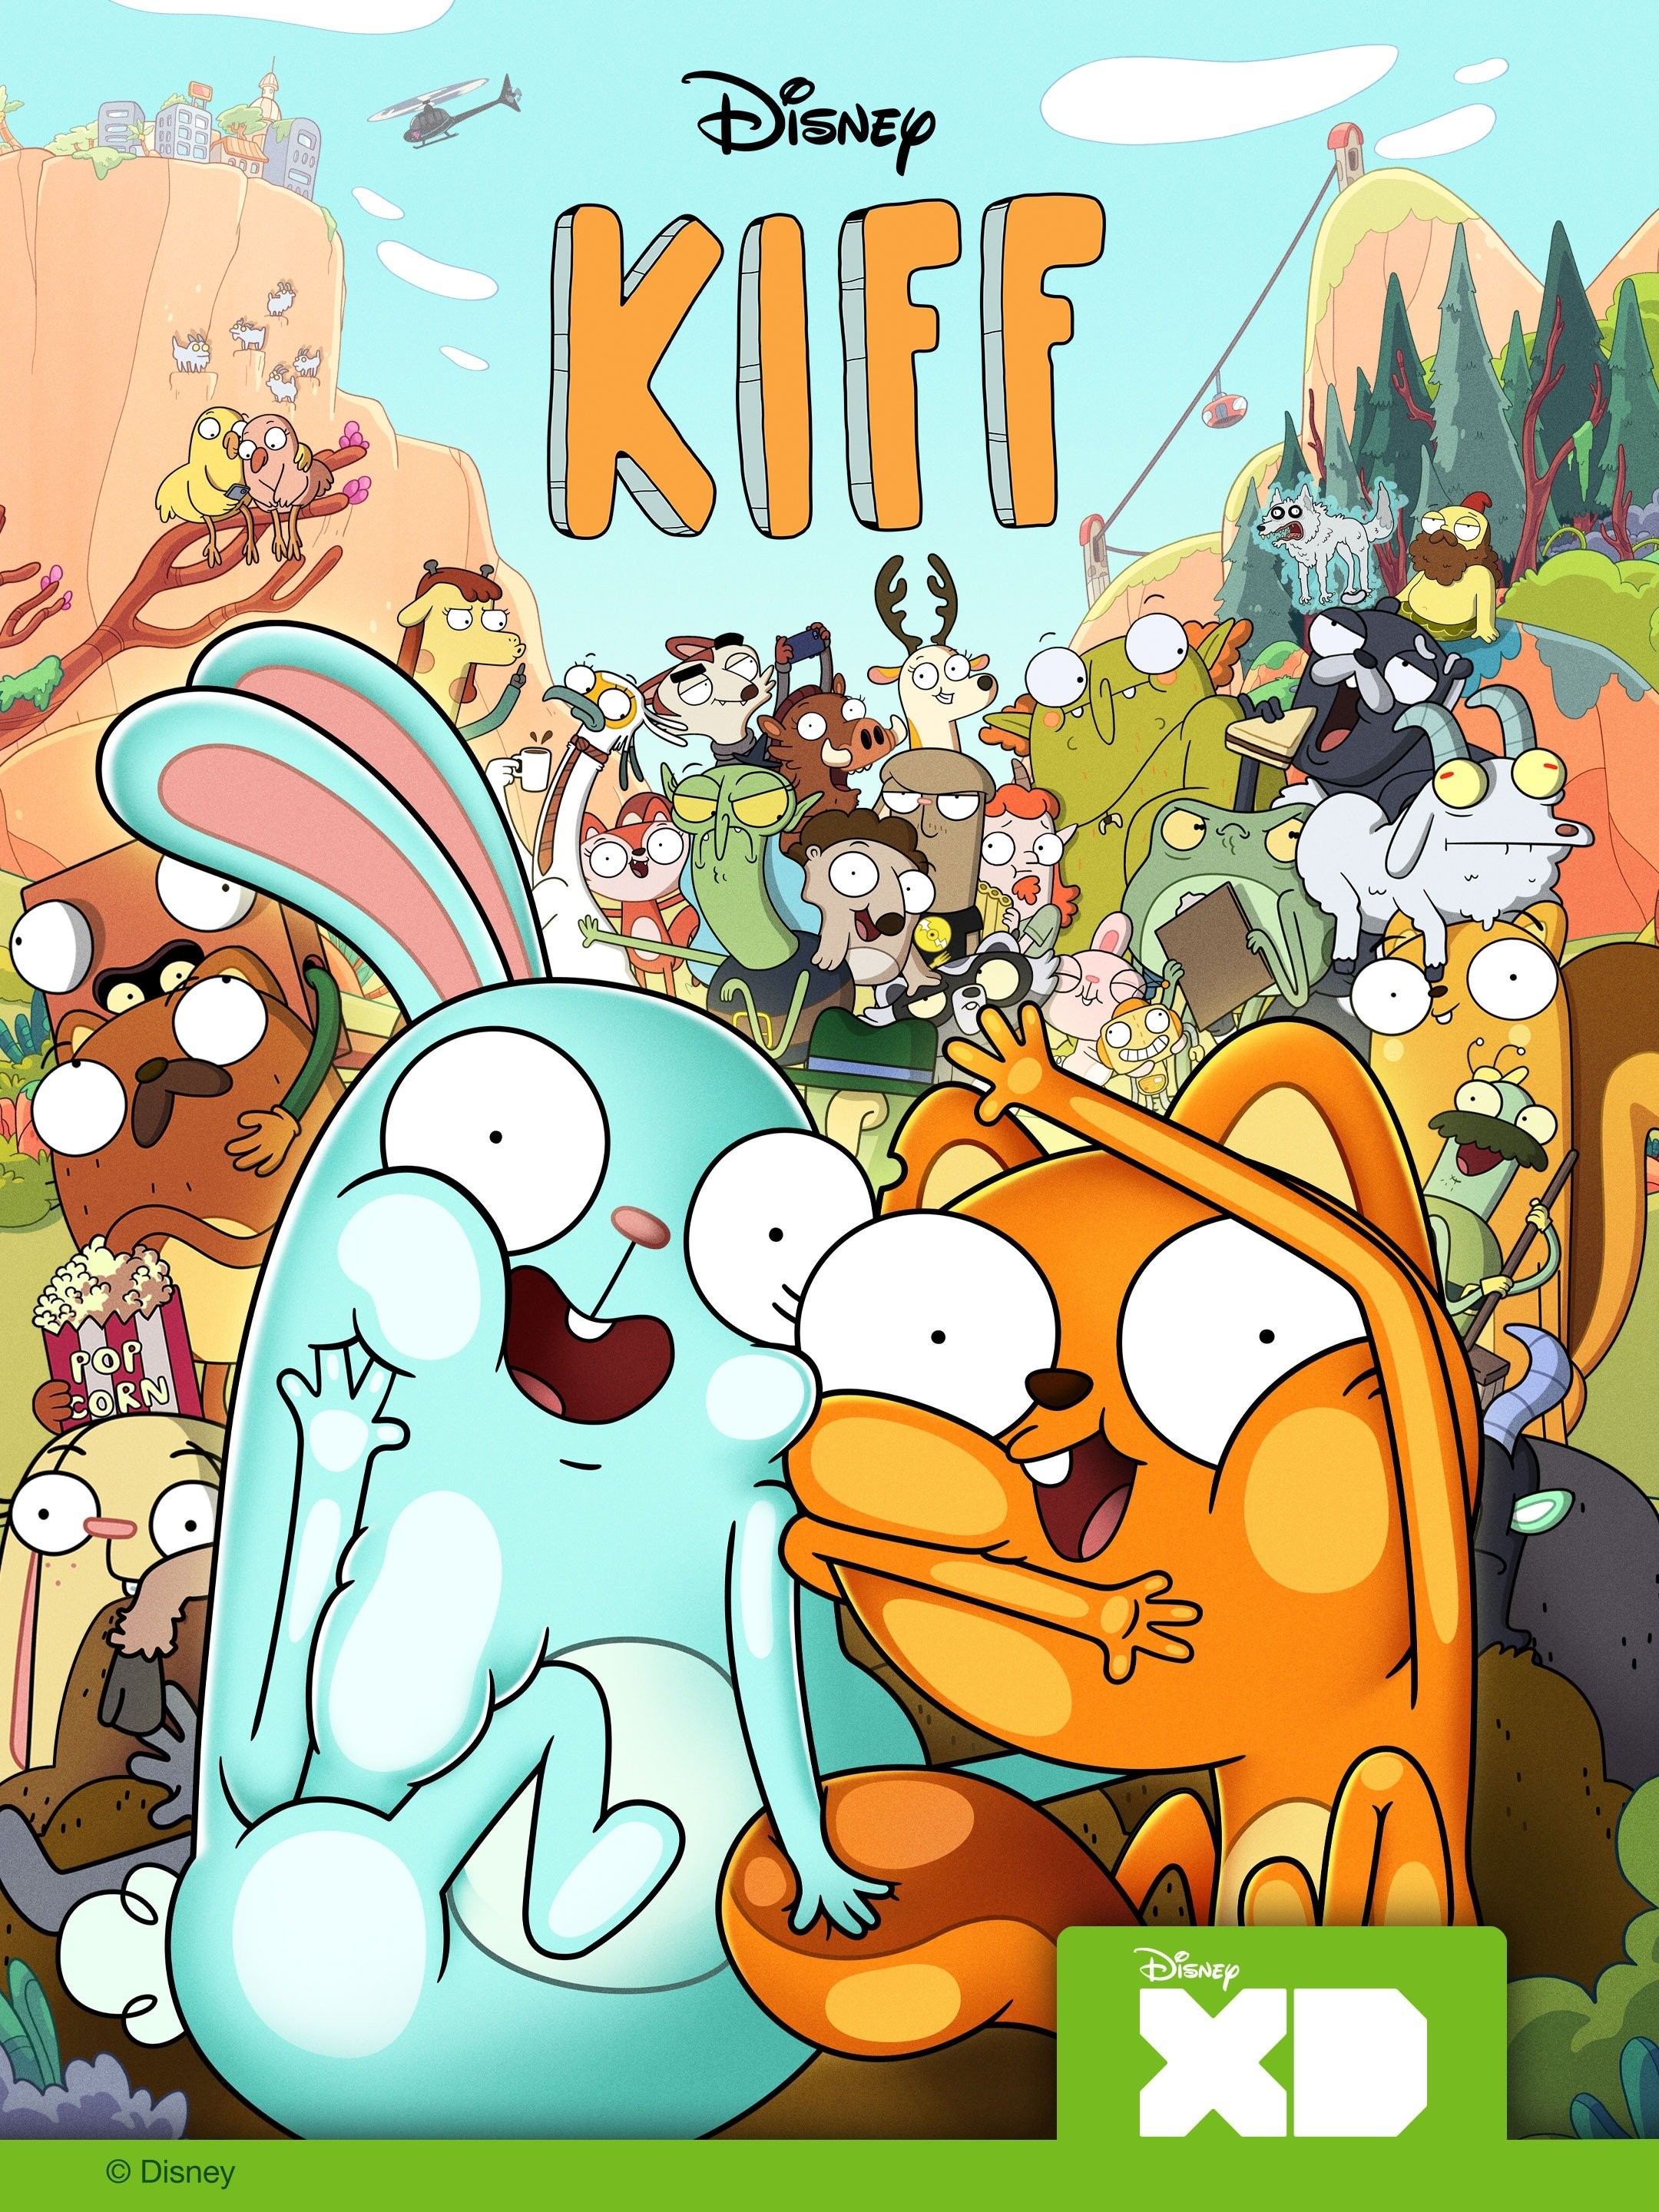 Kiff Season 1 Episodes 39 & 40 Streaming: How to Watch & Stream Online